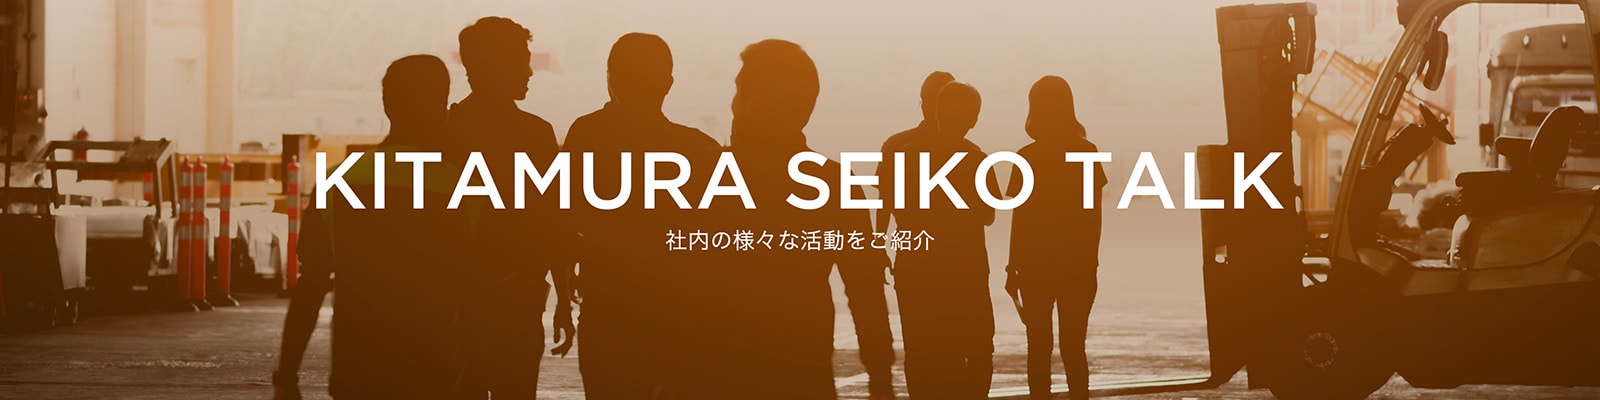 KITAMURA SEIKO TALK 社内の様々な活動をご紹介